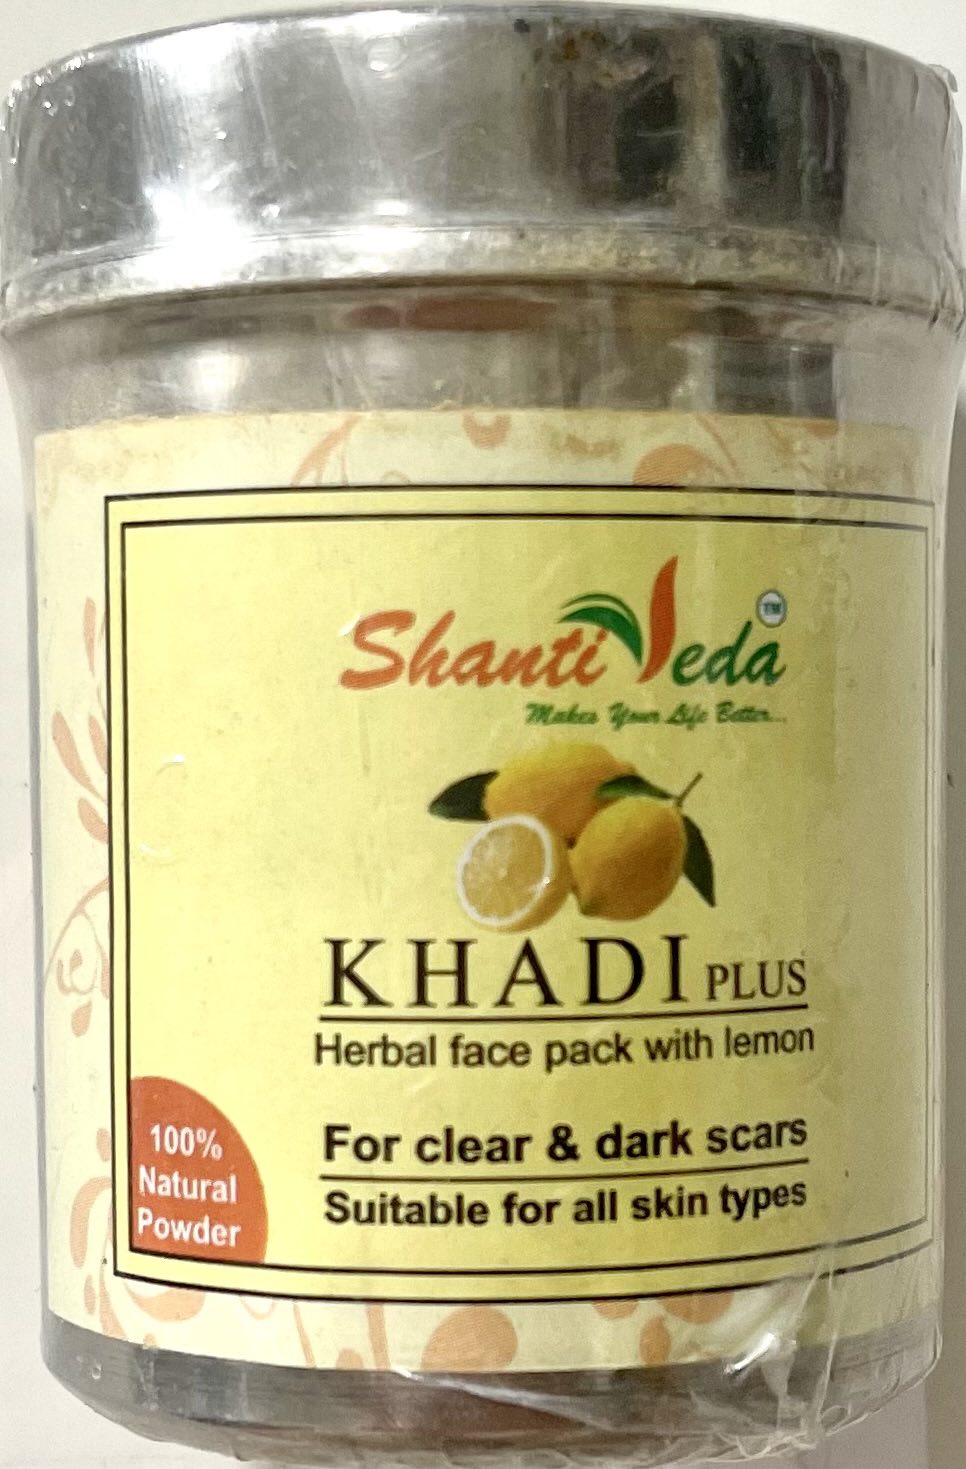 KHADI PLUS Herbal Face Pack With LEMON, Shanti Veda (КХАДИ ПЛЮС Травяная маска для лица с ЛИМОНОМ, Шанти Веда), 100 г.